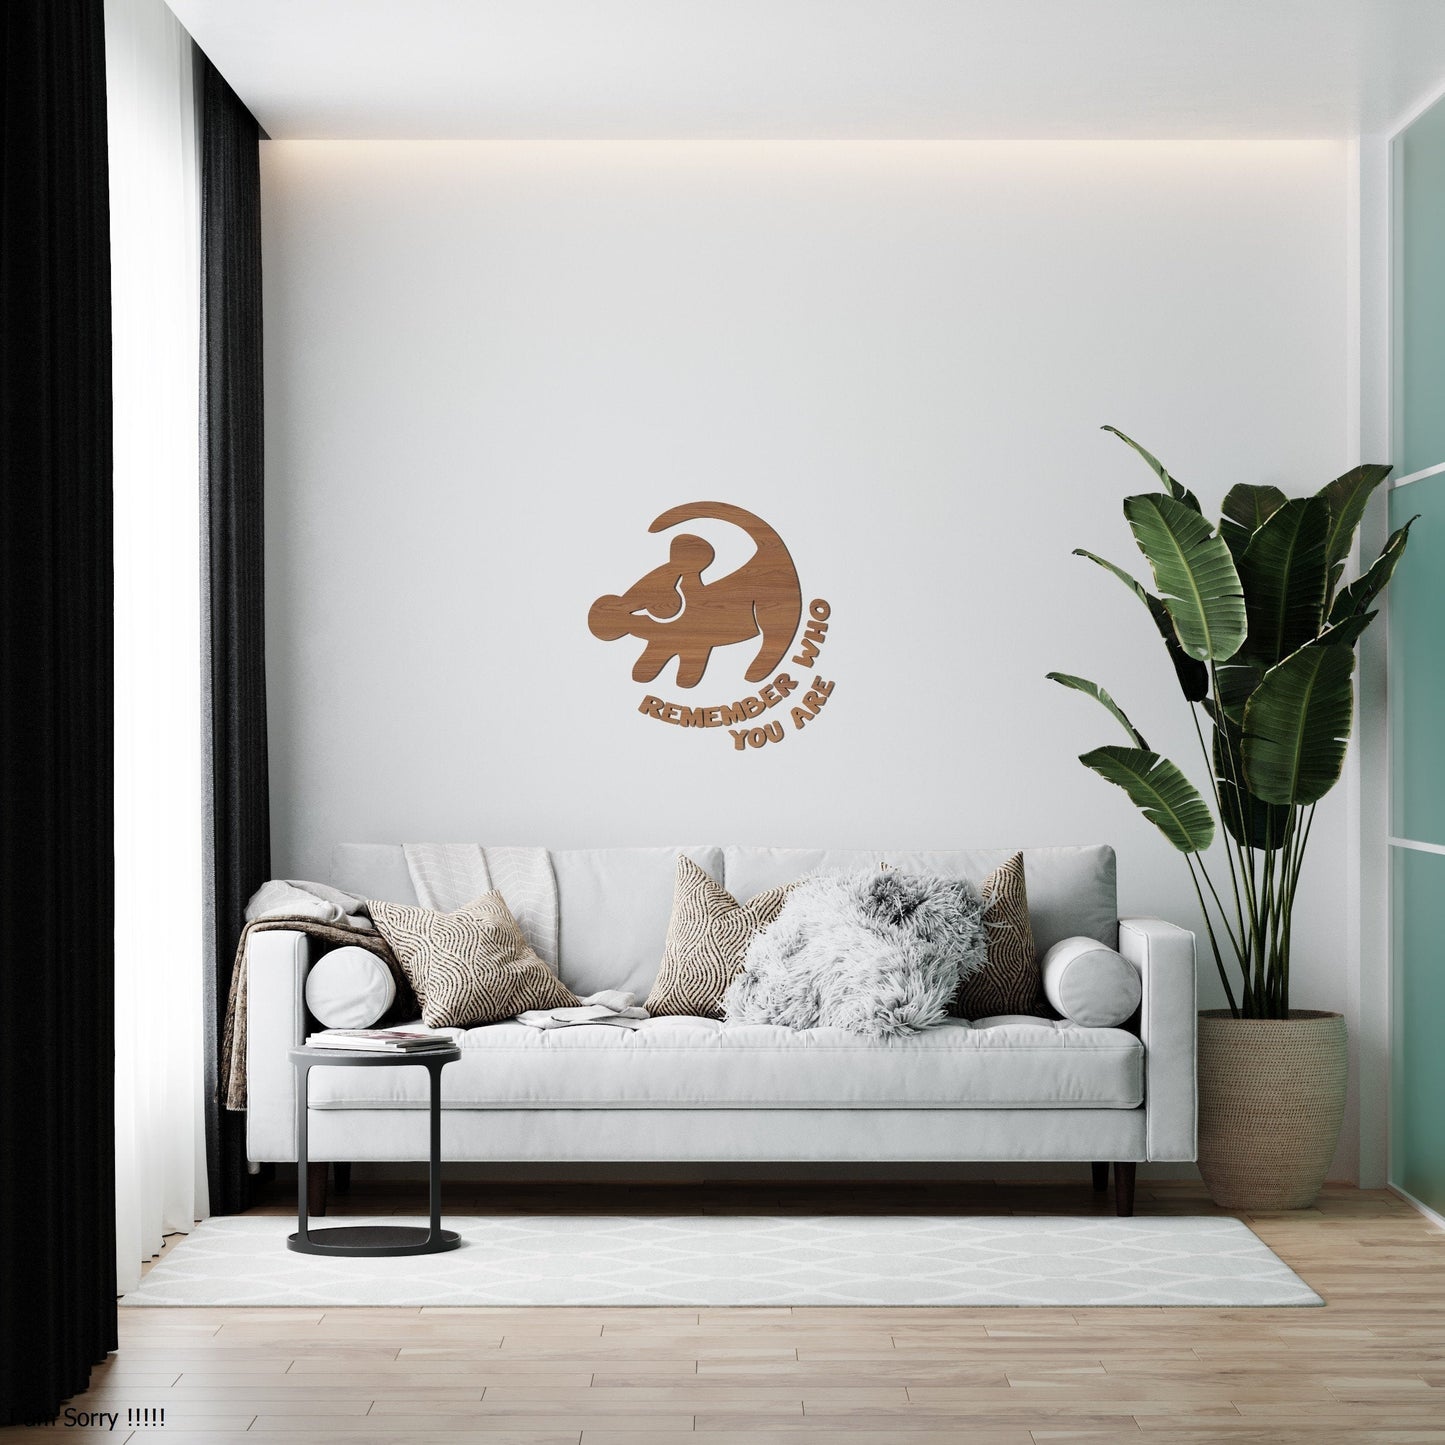 Unik4art - Wooden wall art home decor, Lion King Simba wall art decoration, livingroom bedroom nursery kid playground morden decor